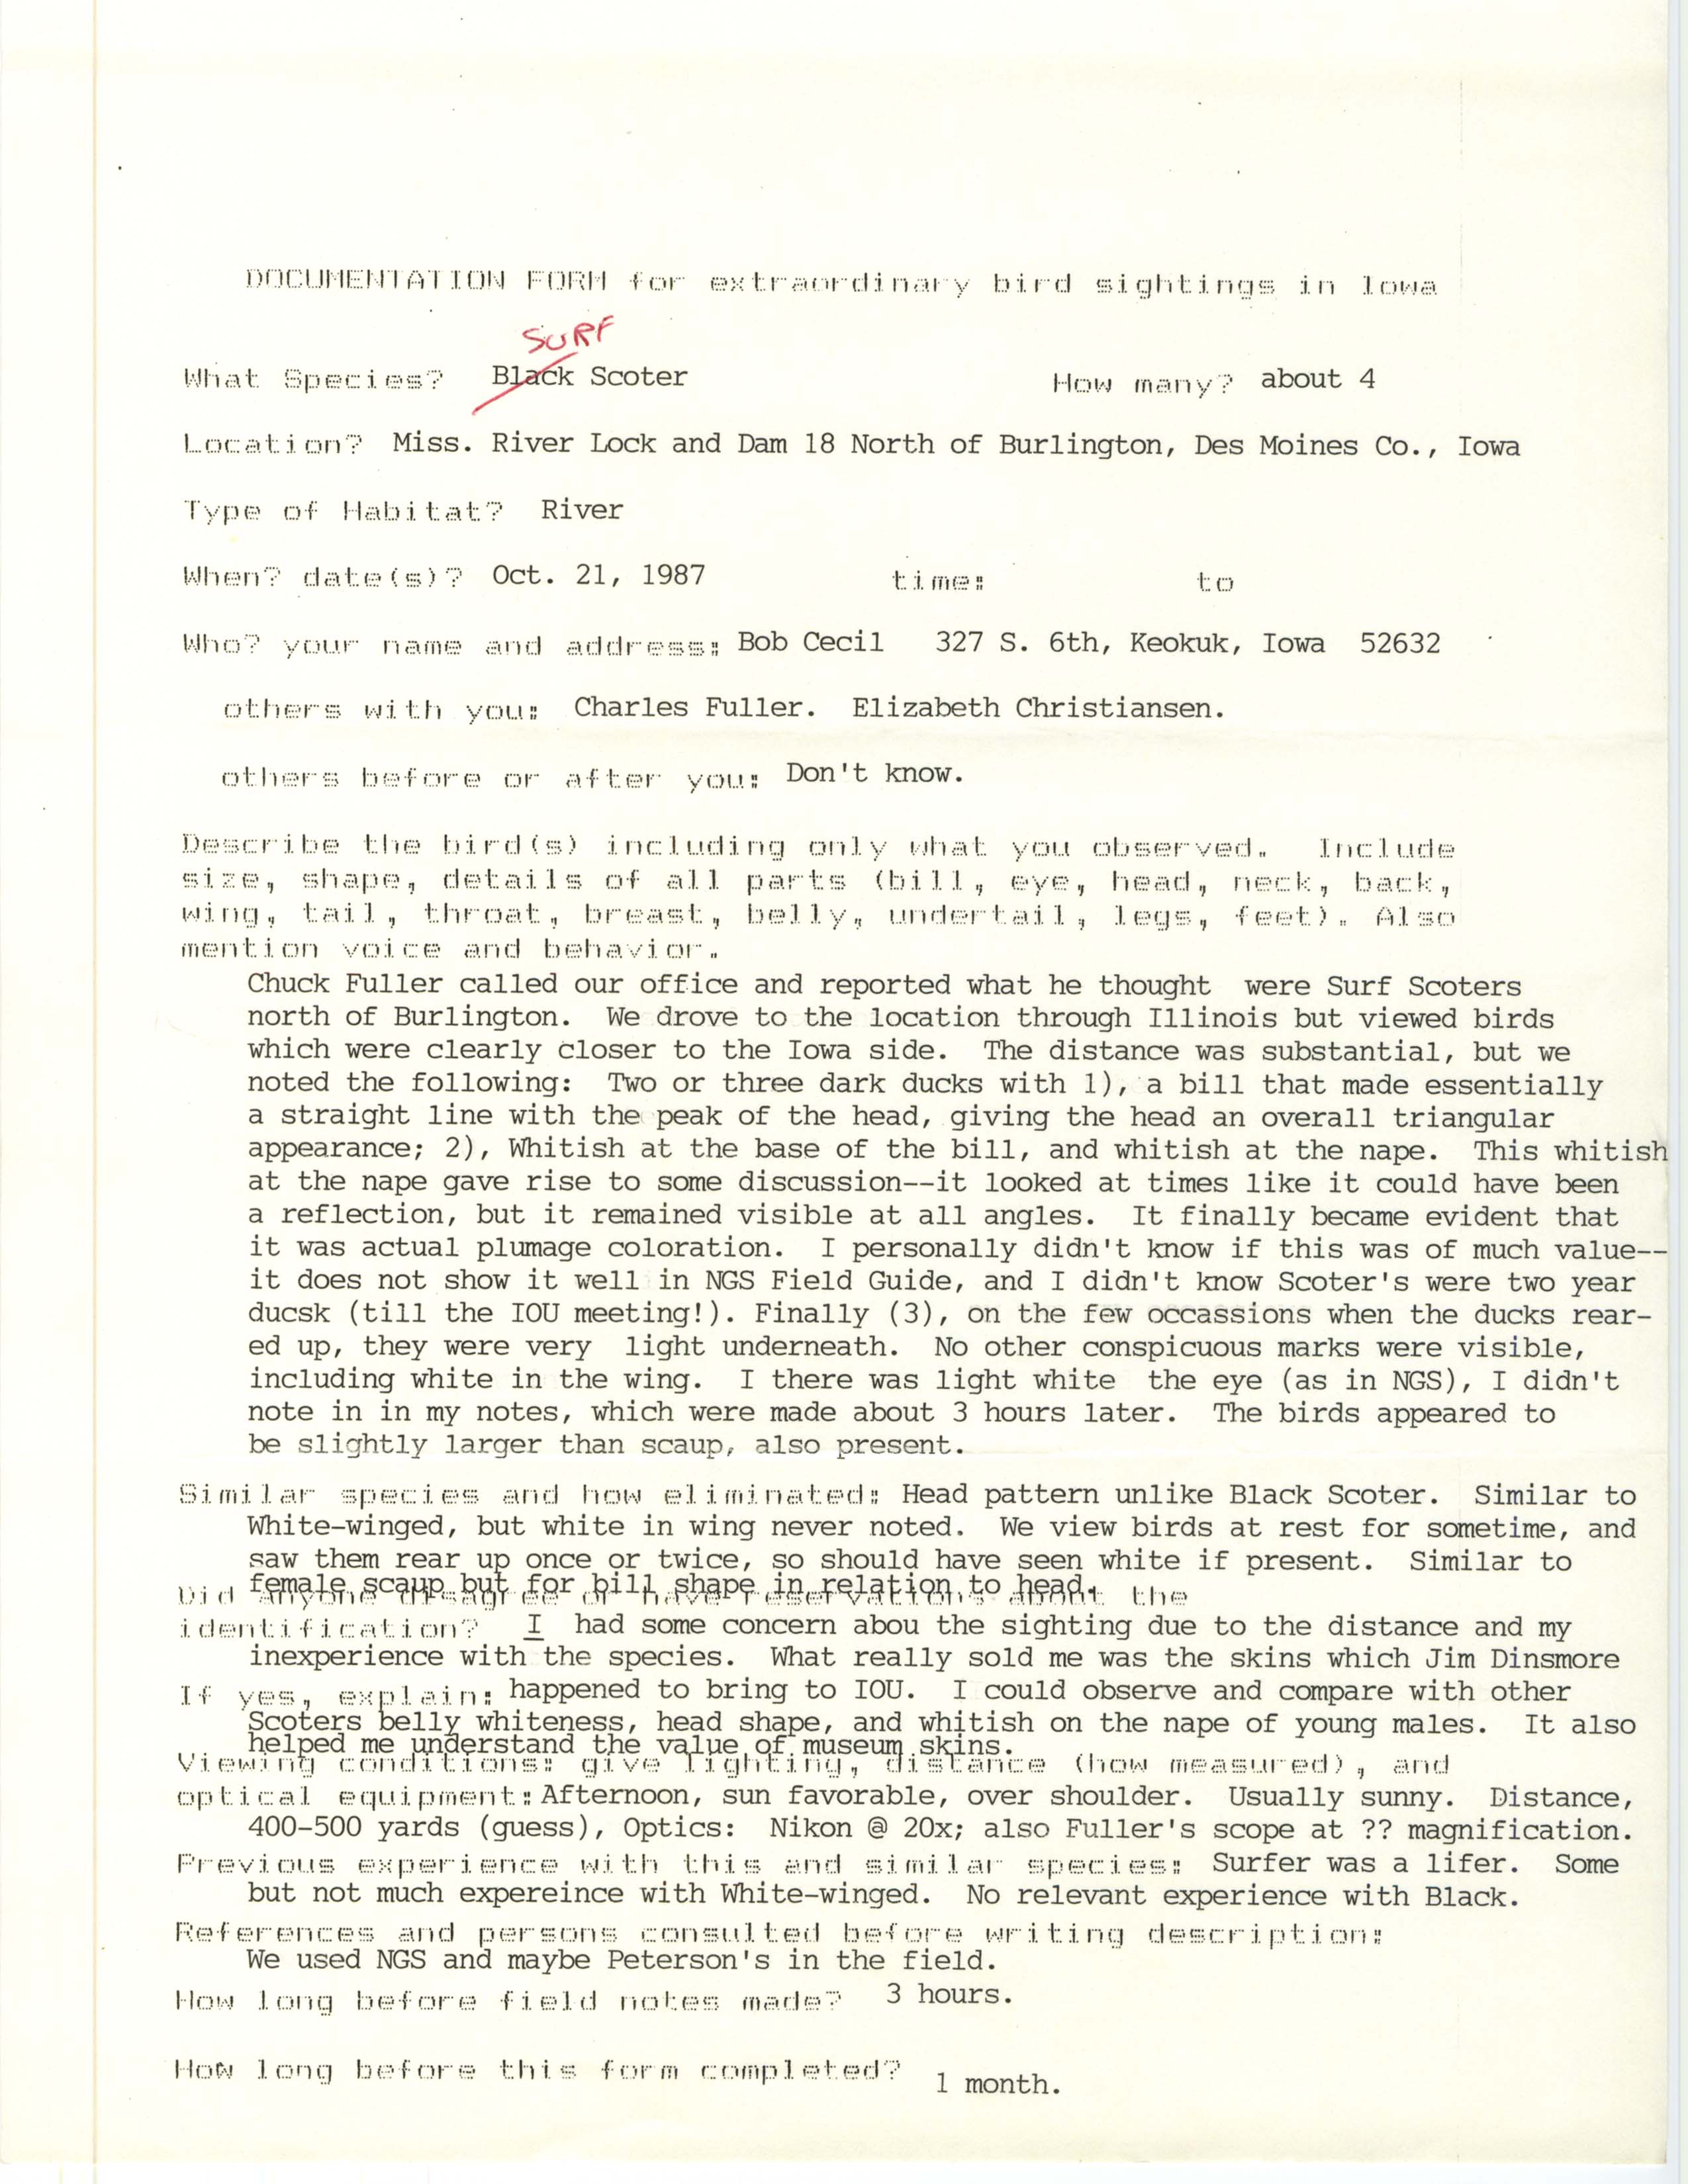 Rare bird documentation form for Surf Scoter at Lock and Dam 18, 1987